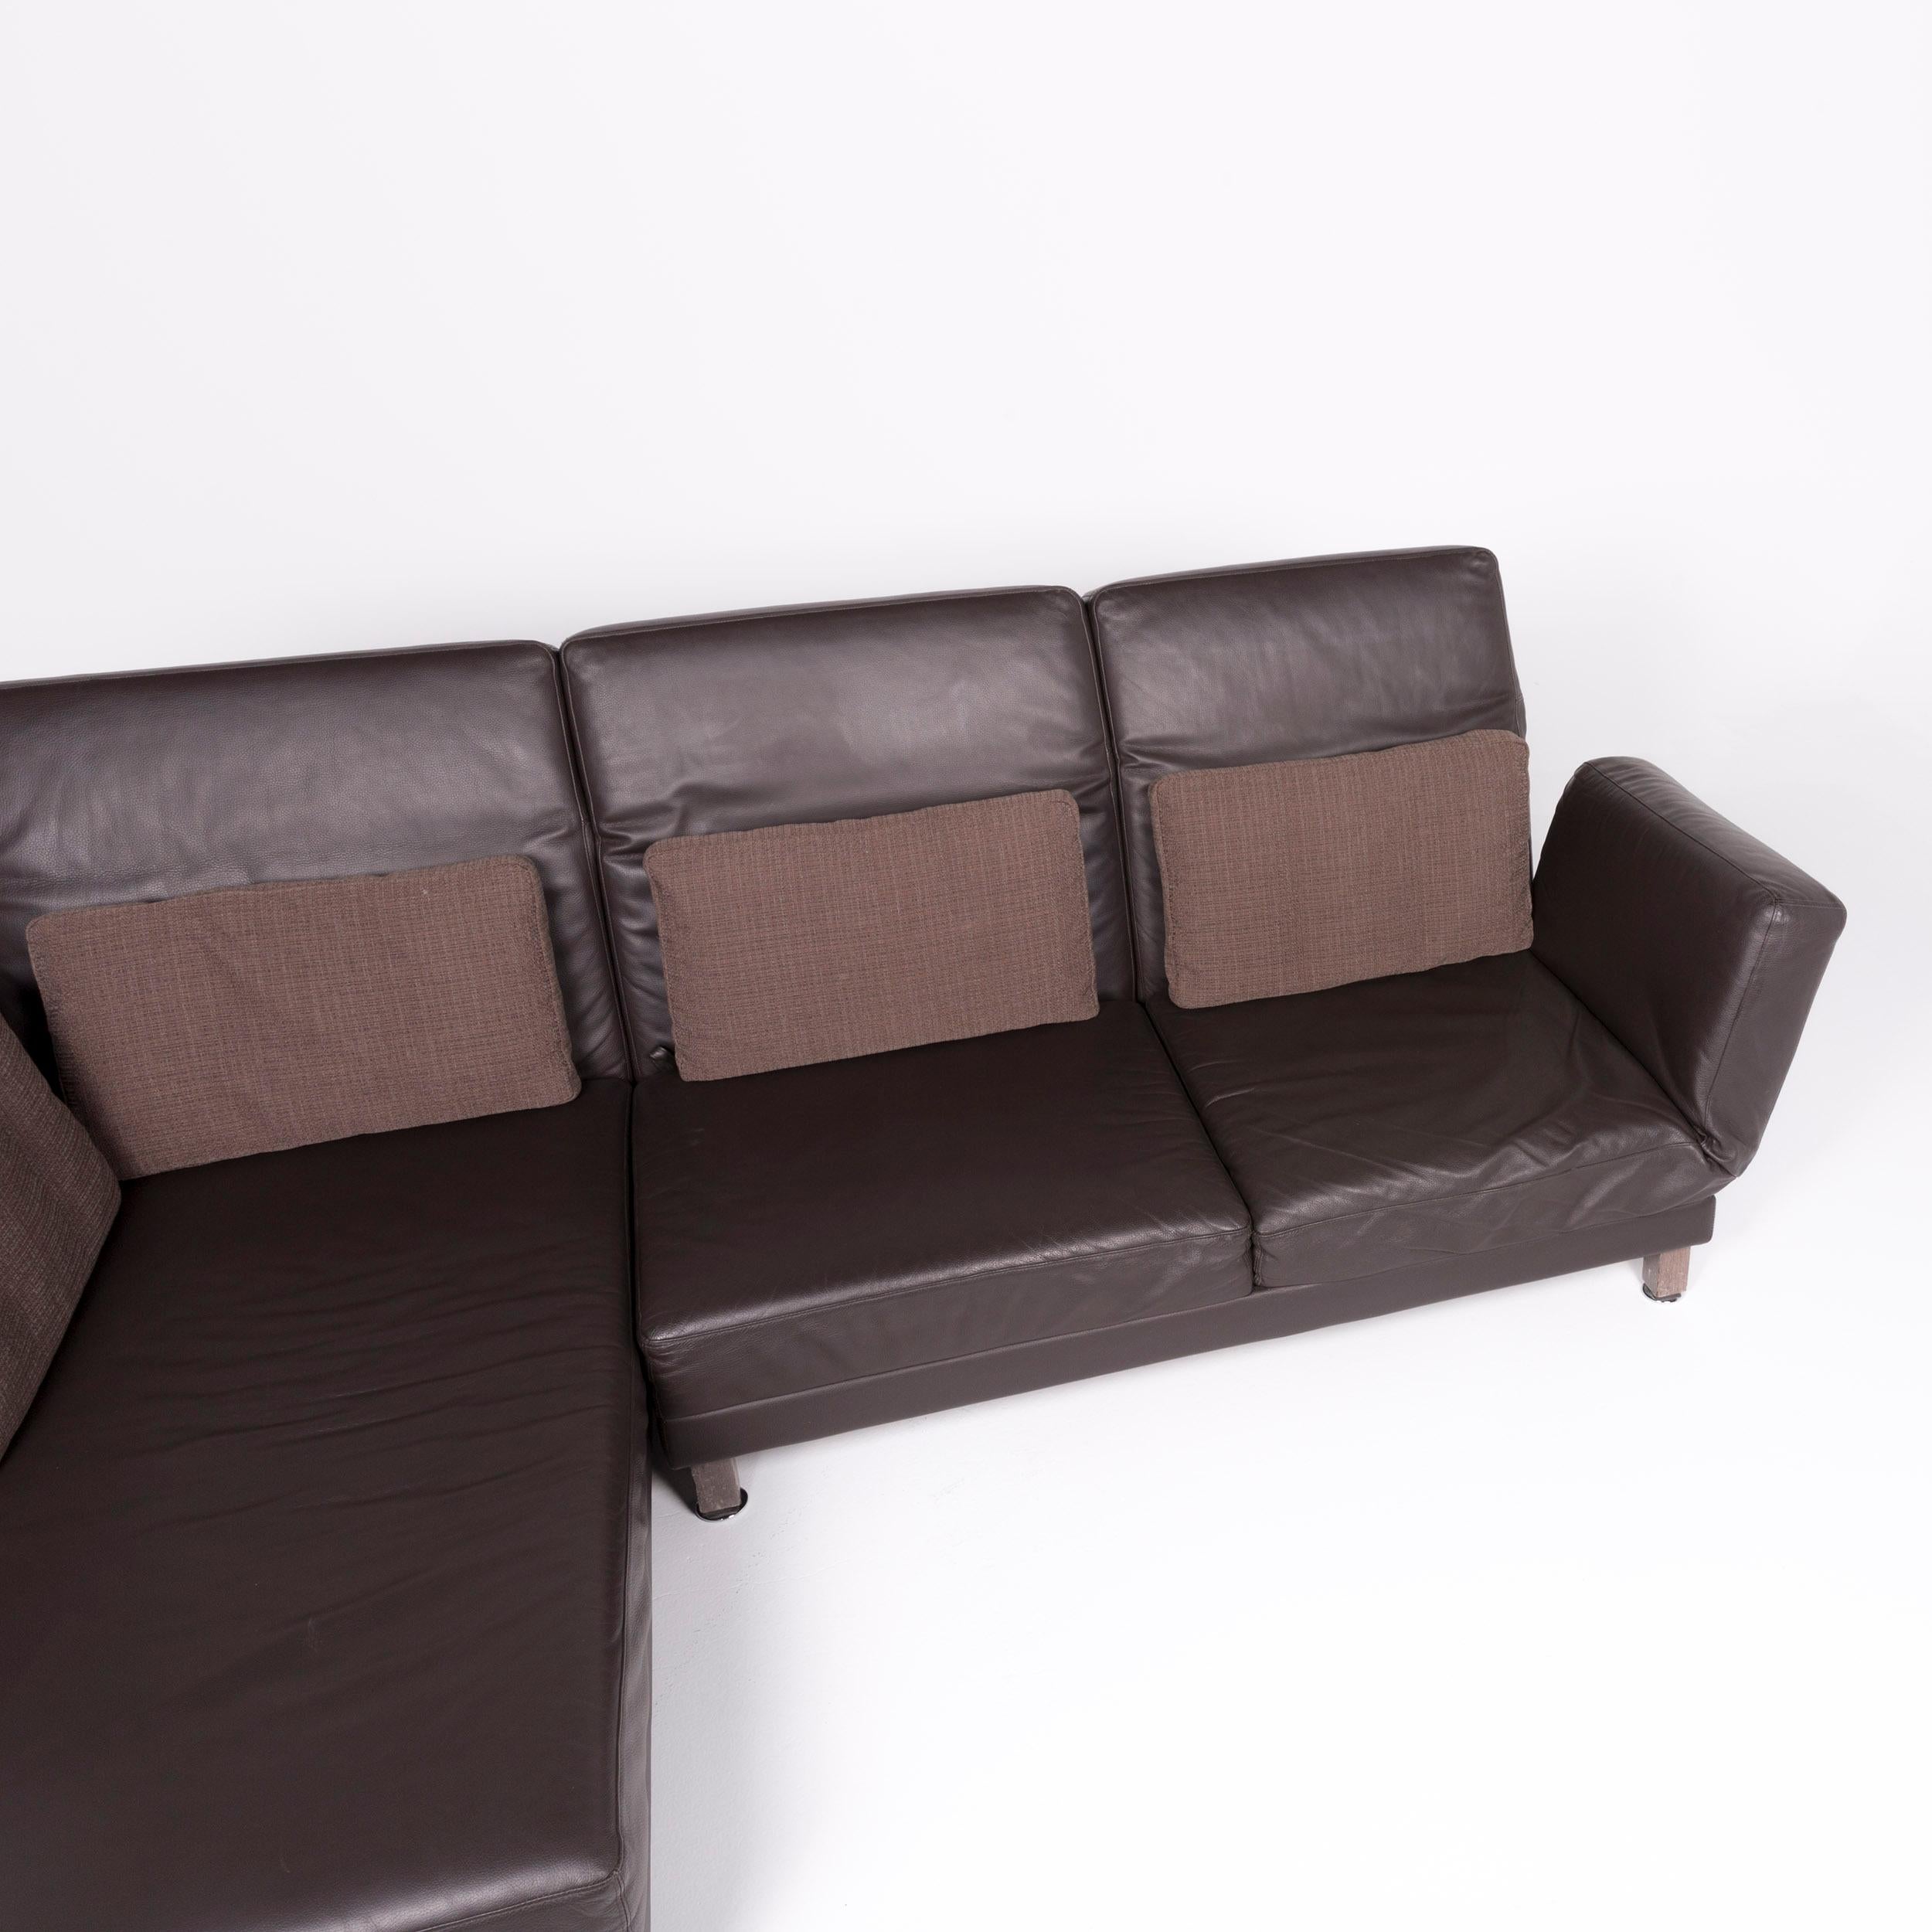 Brühl & Sippold Moule Designer Leather Corner Sofa Brown Genuine Leather Sofa 2